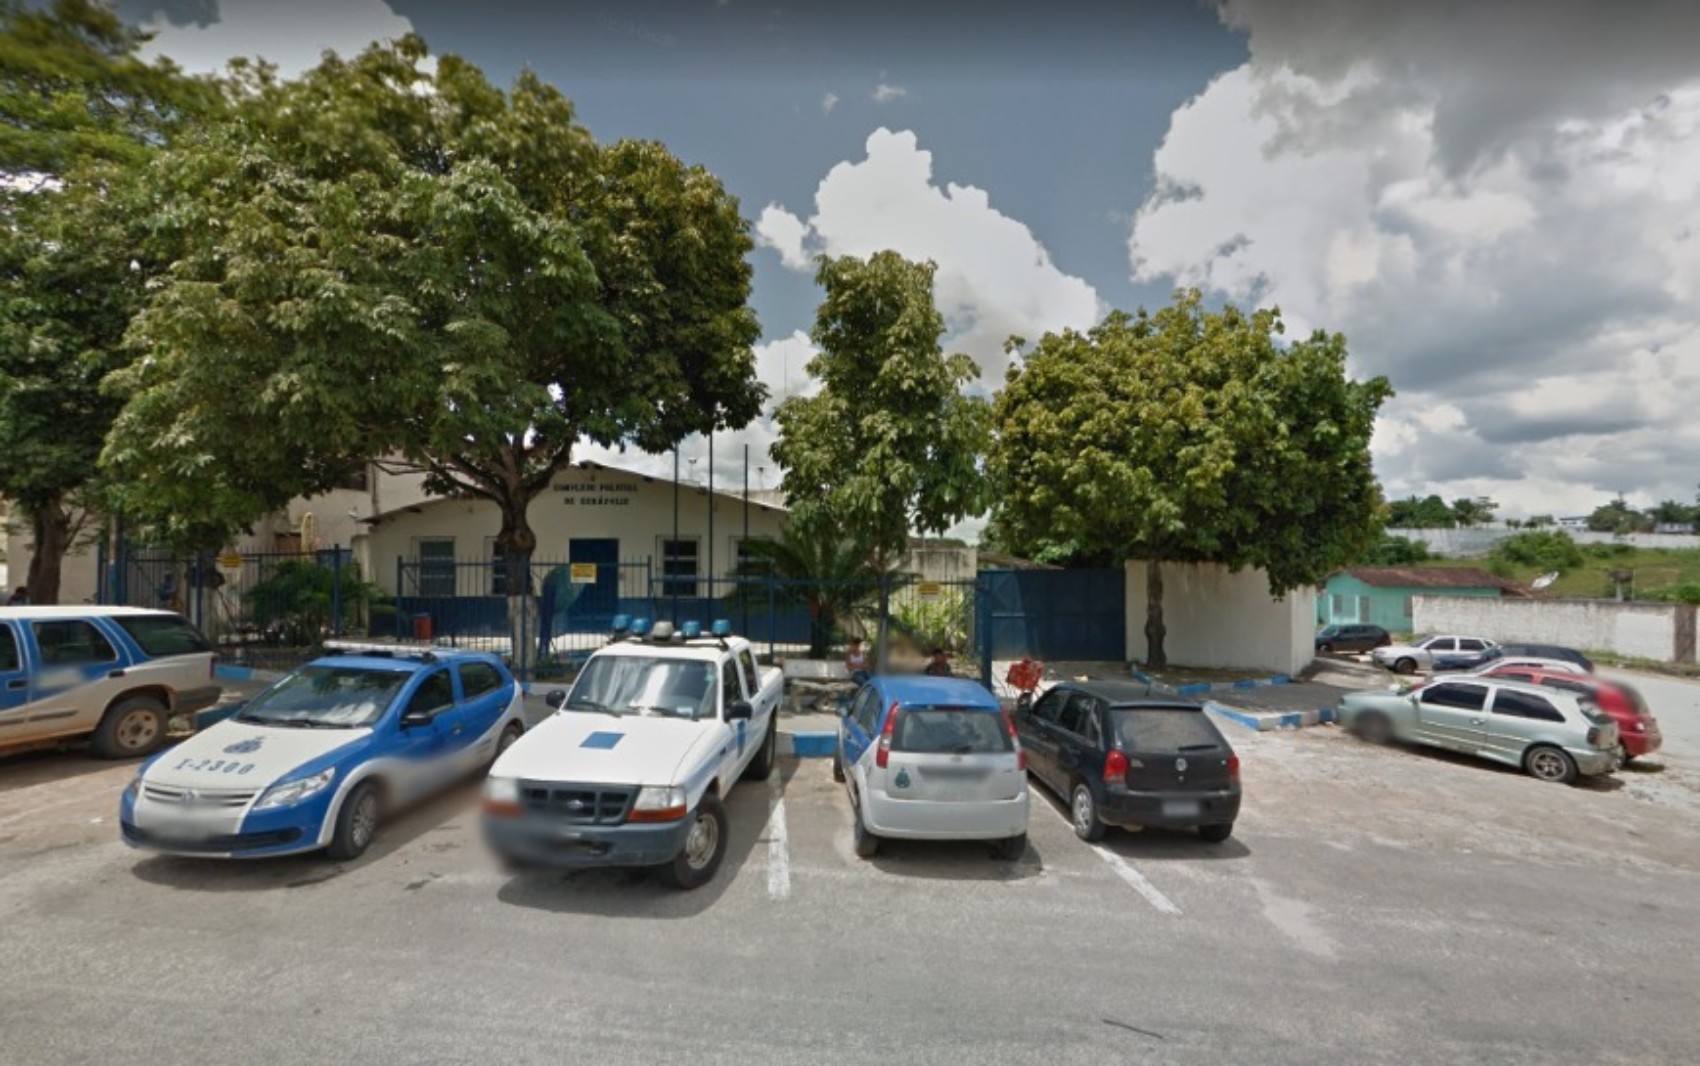 Suspeito de estupro de vulnerável no Espírito Santo, borracheiro é preso no extremo sul da Bahia